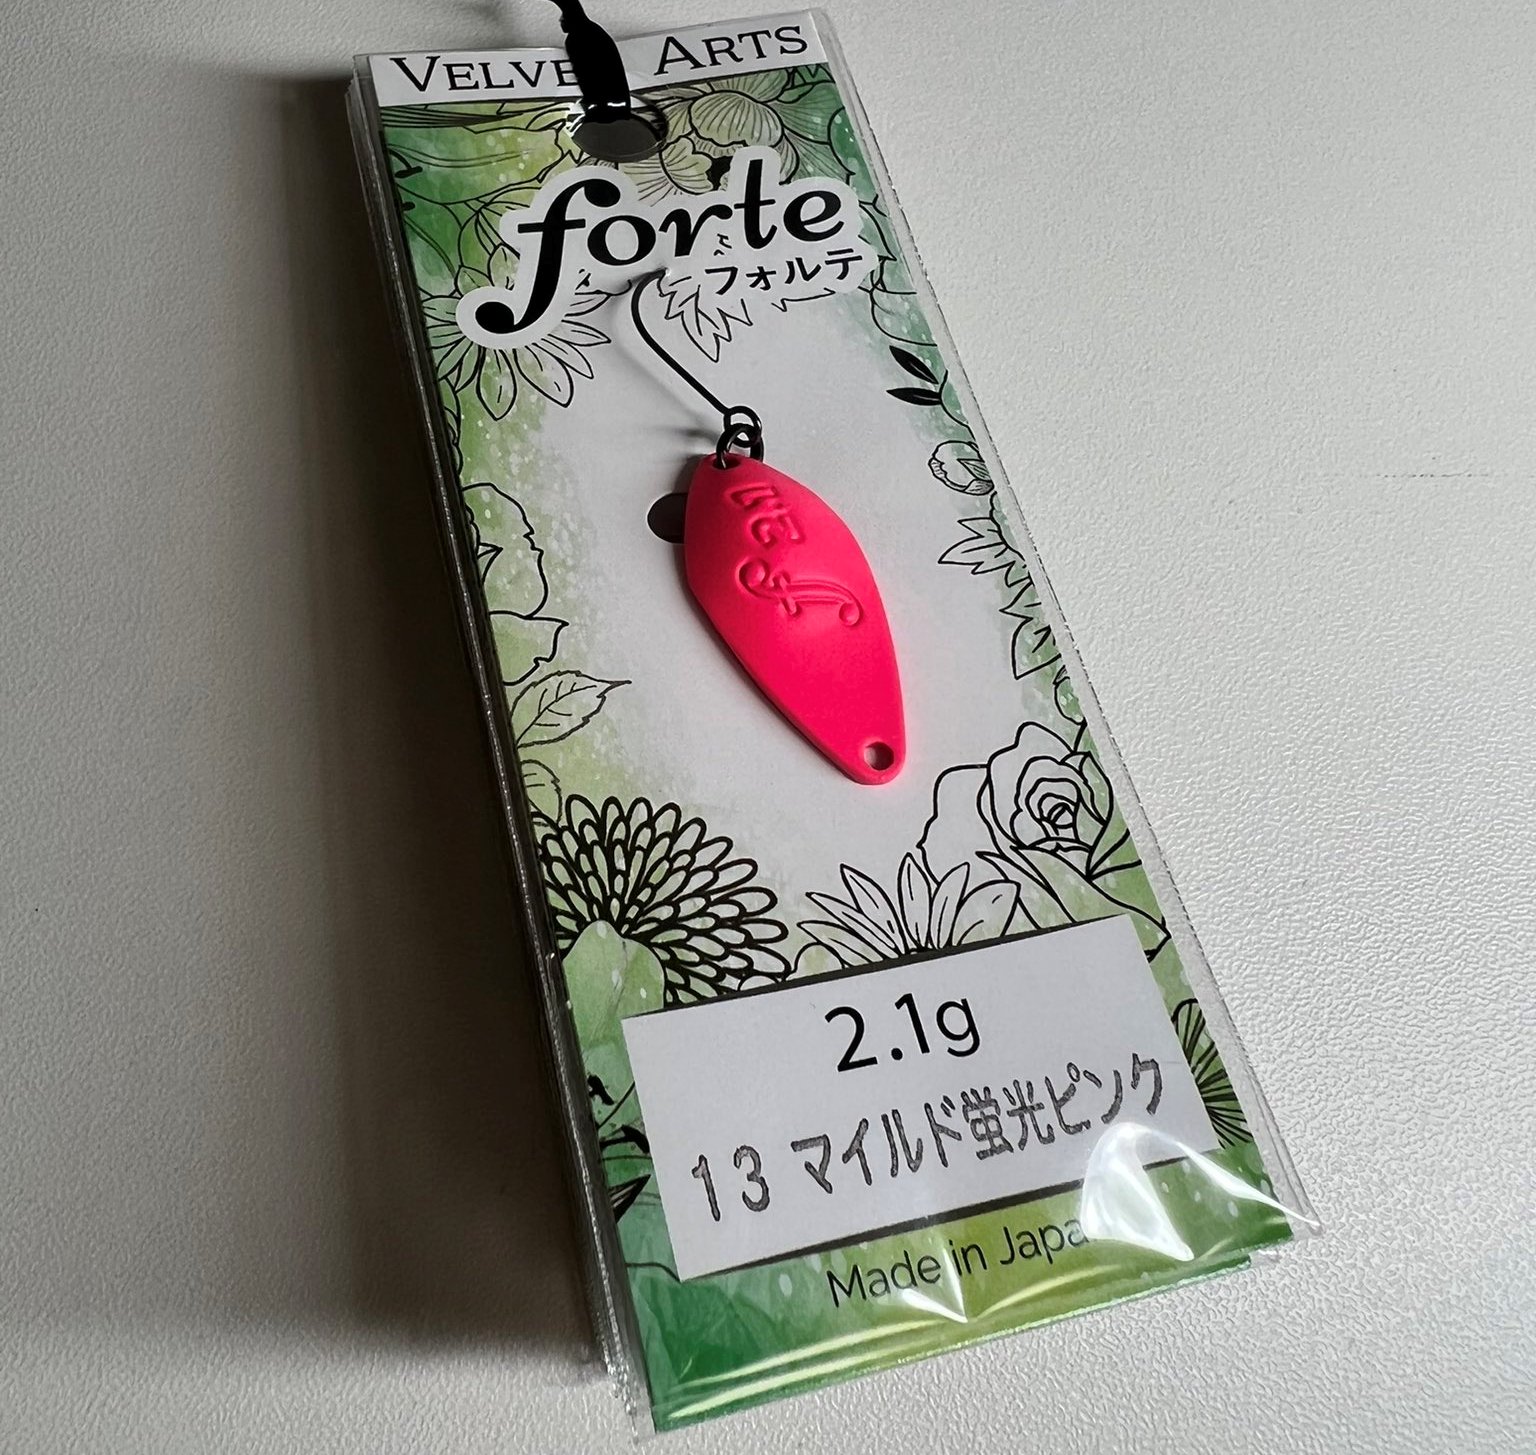 VELVET ARTS Forte 2.1g #20 Silver Lures buy at Fishingshop.kiwi